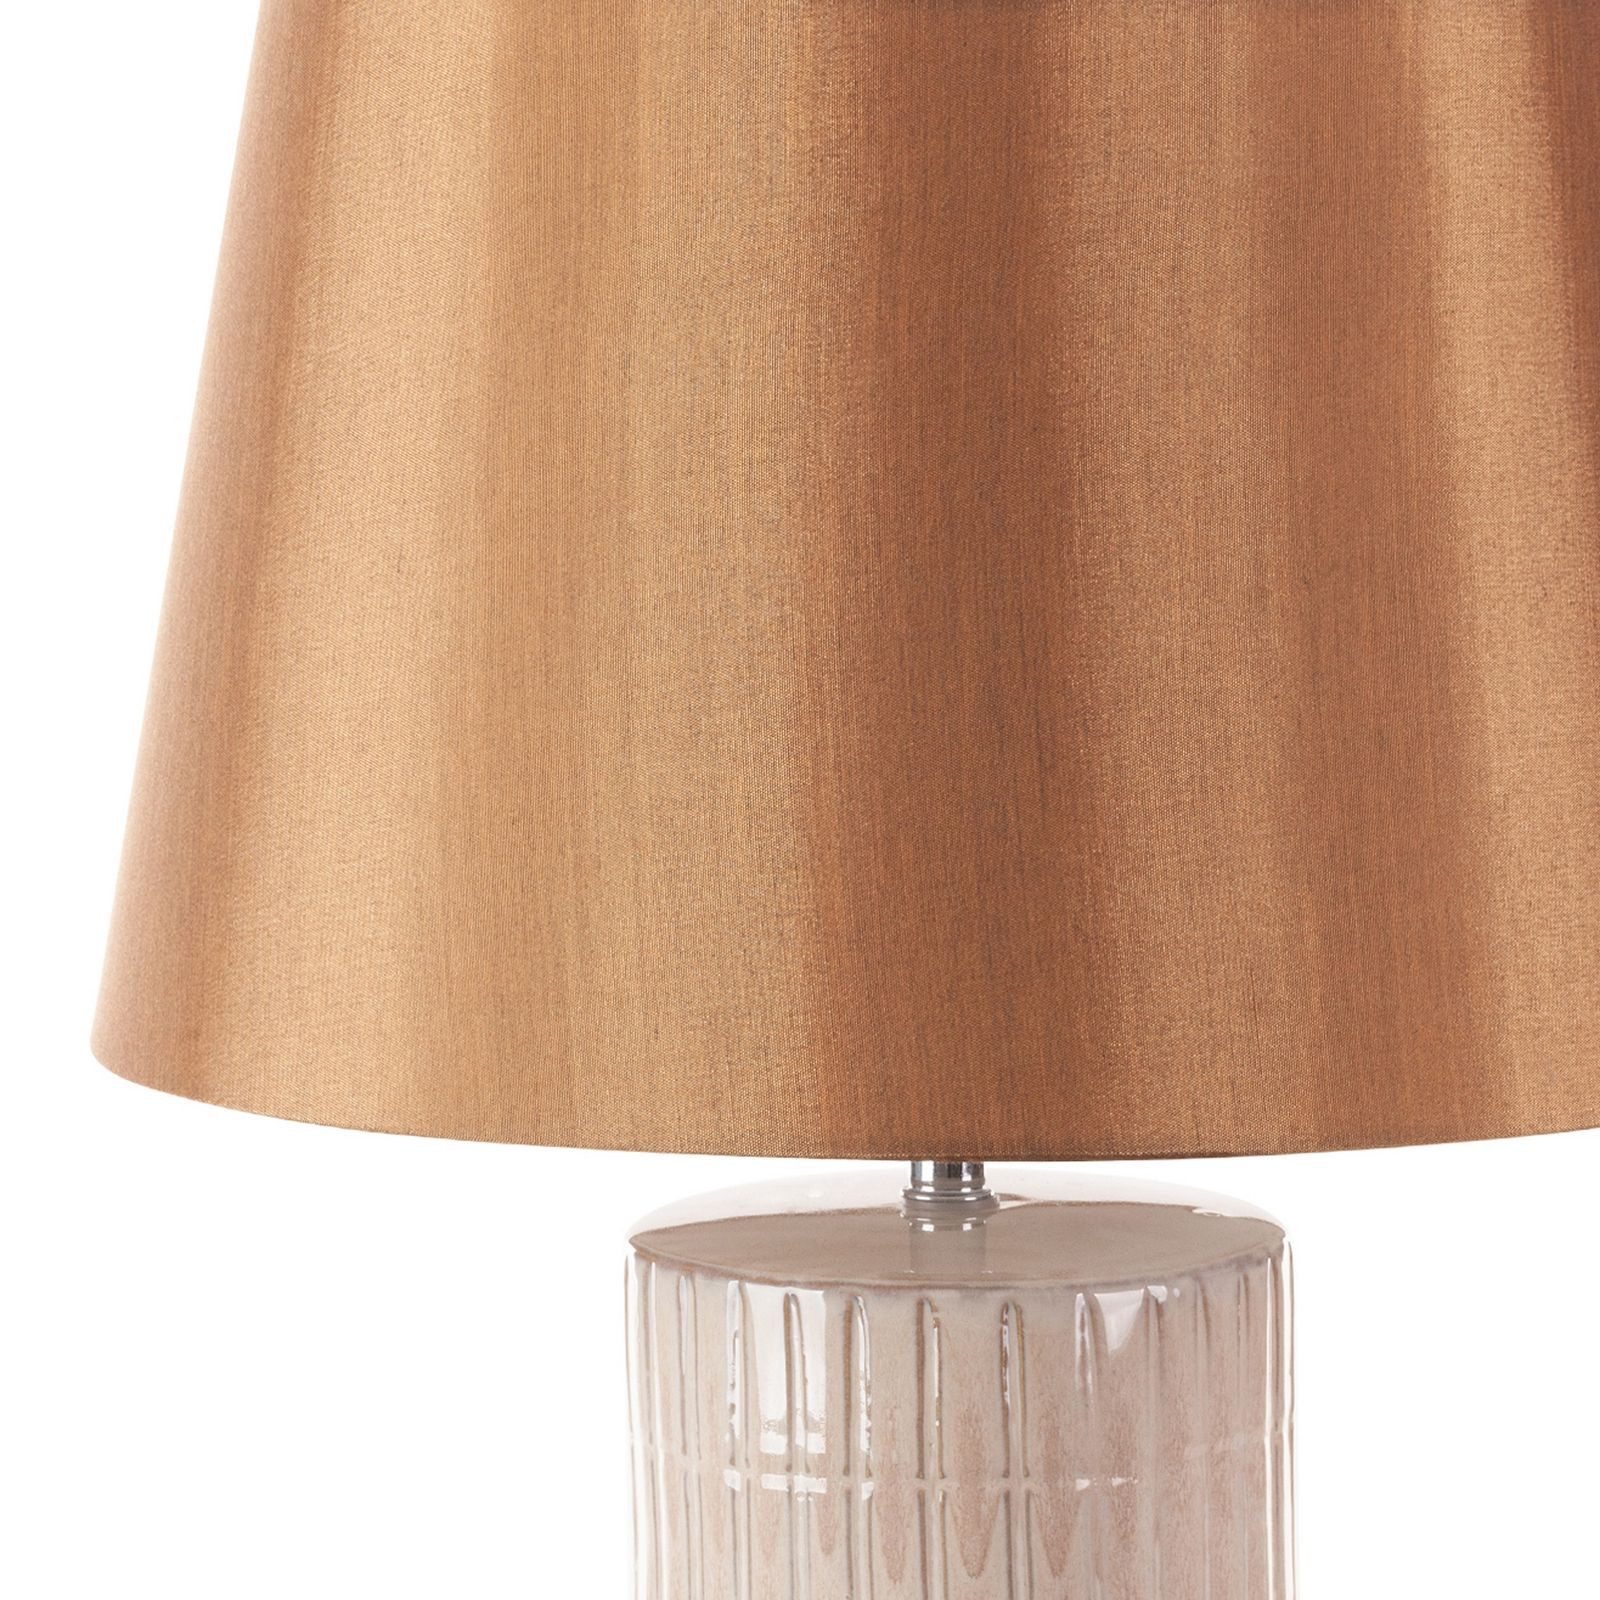 Dekoratívna lampa EDNA 01 krémová